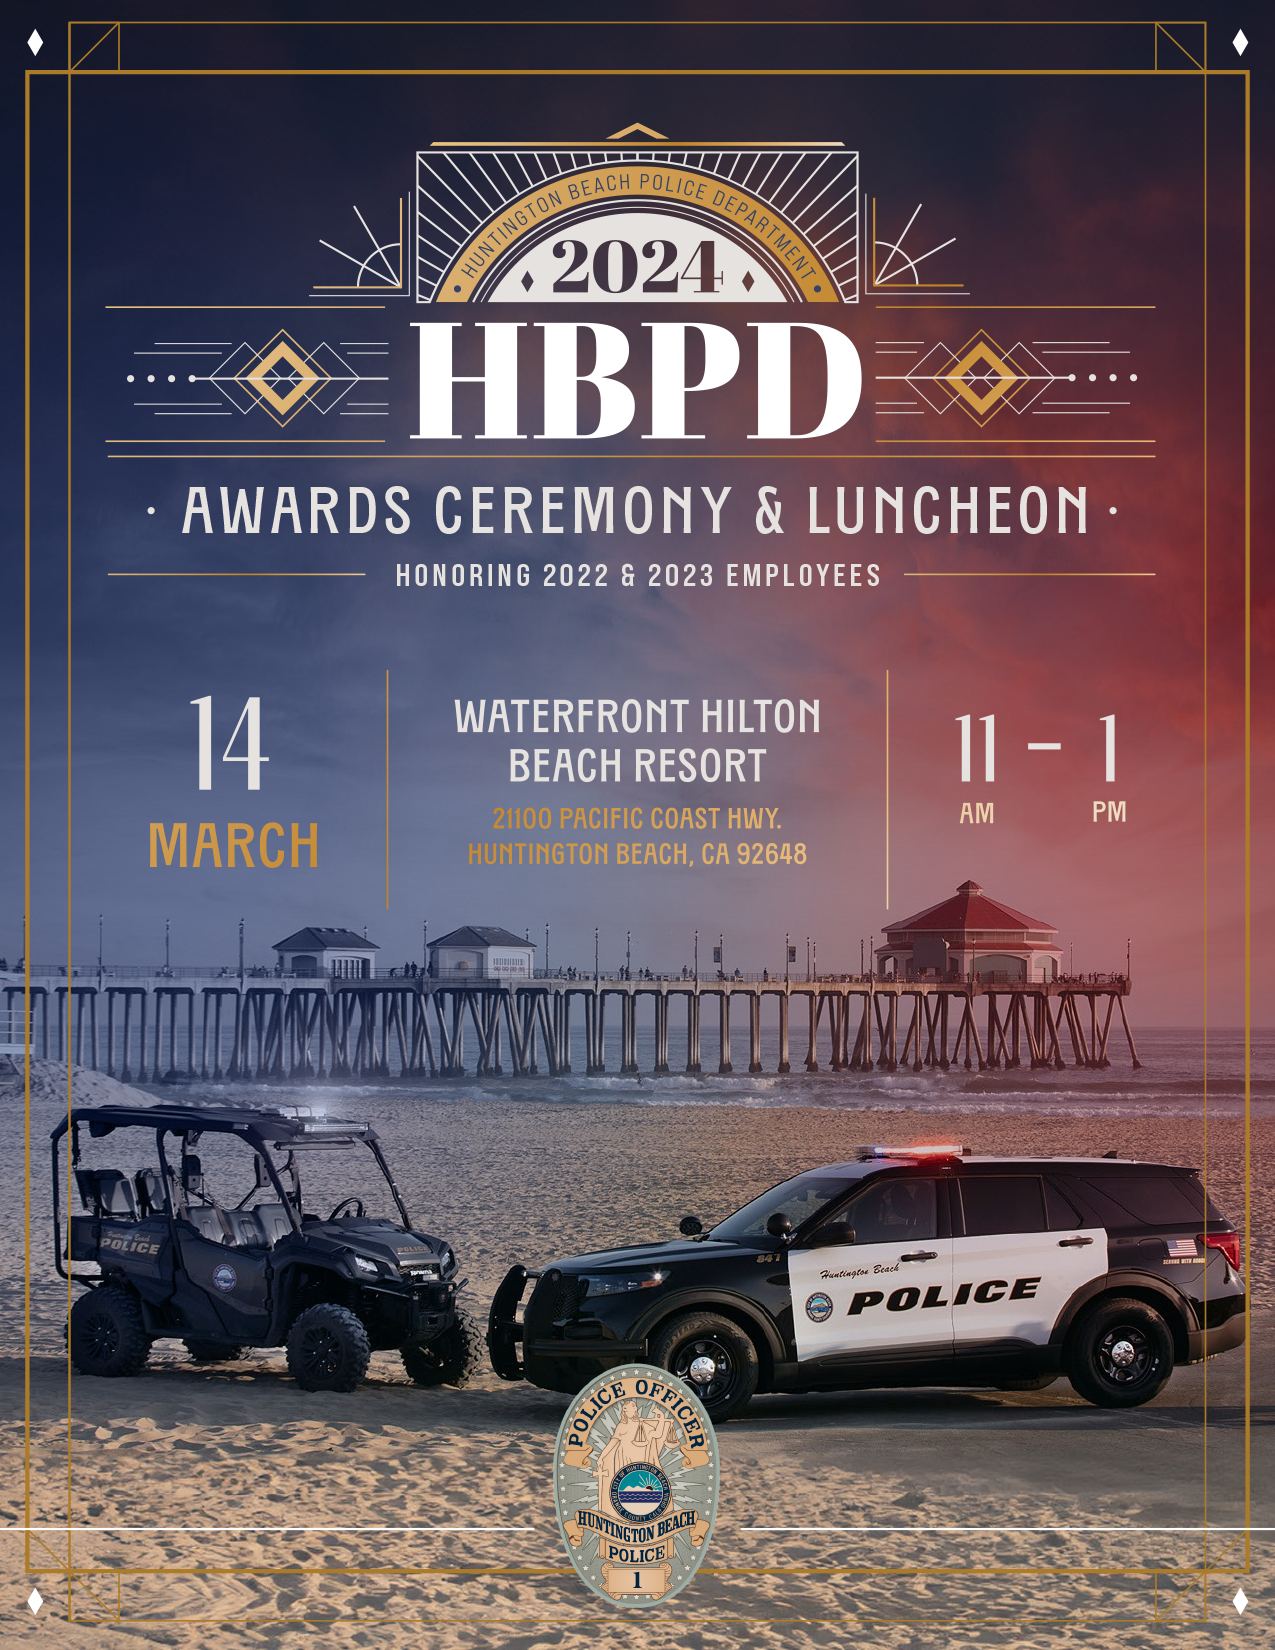 HBPD Awards Ceremony